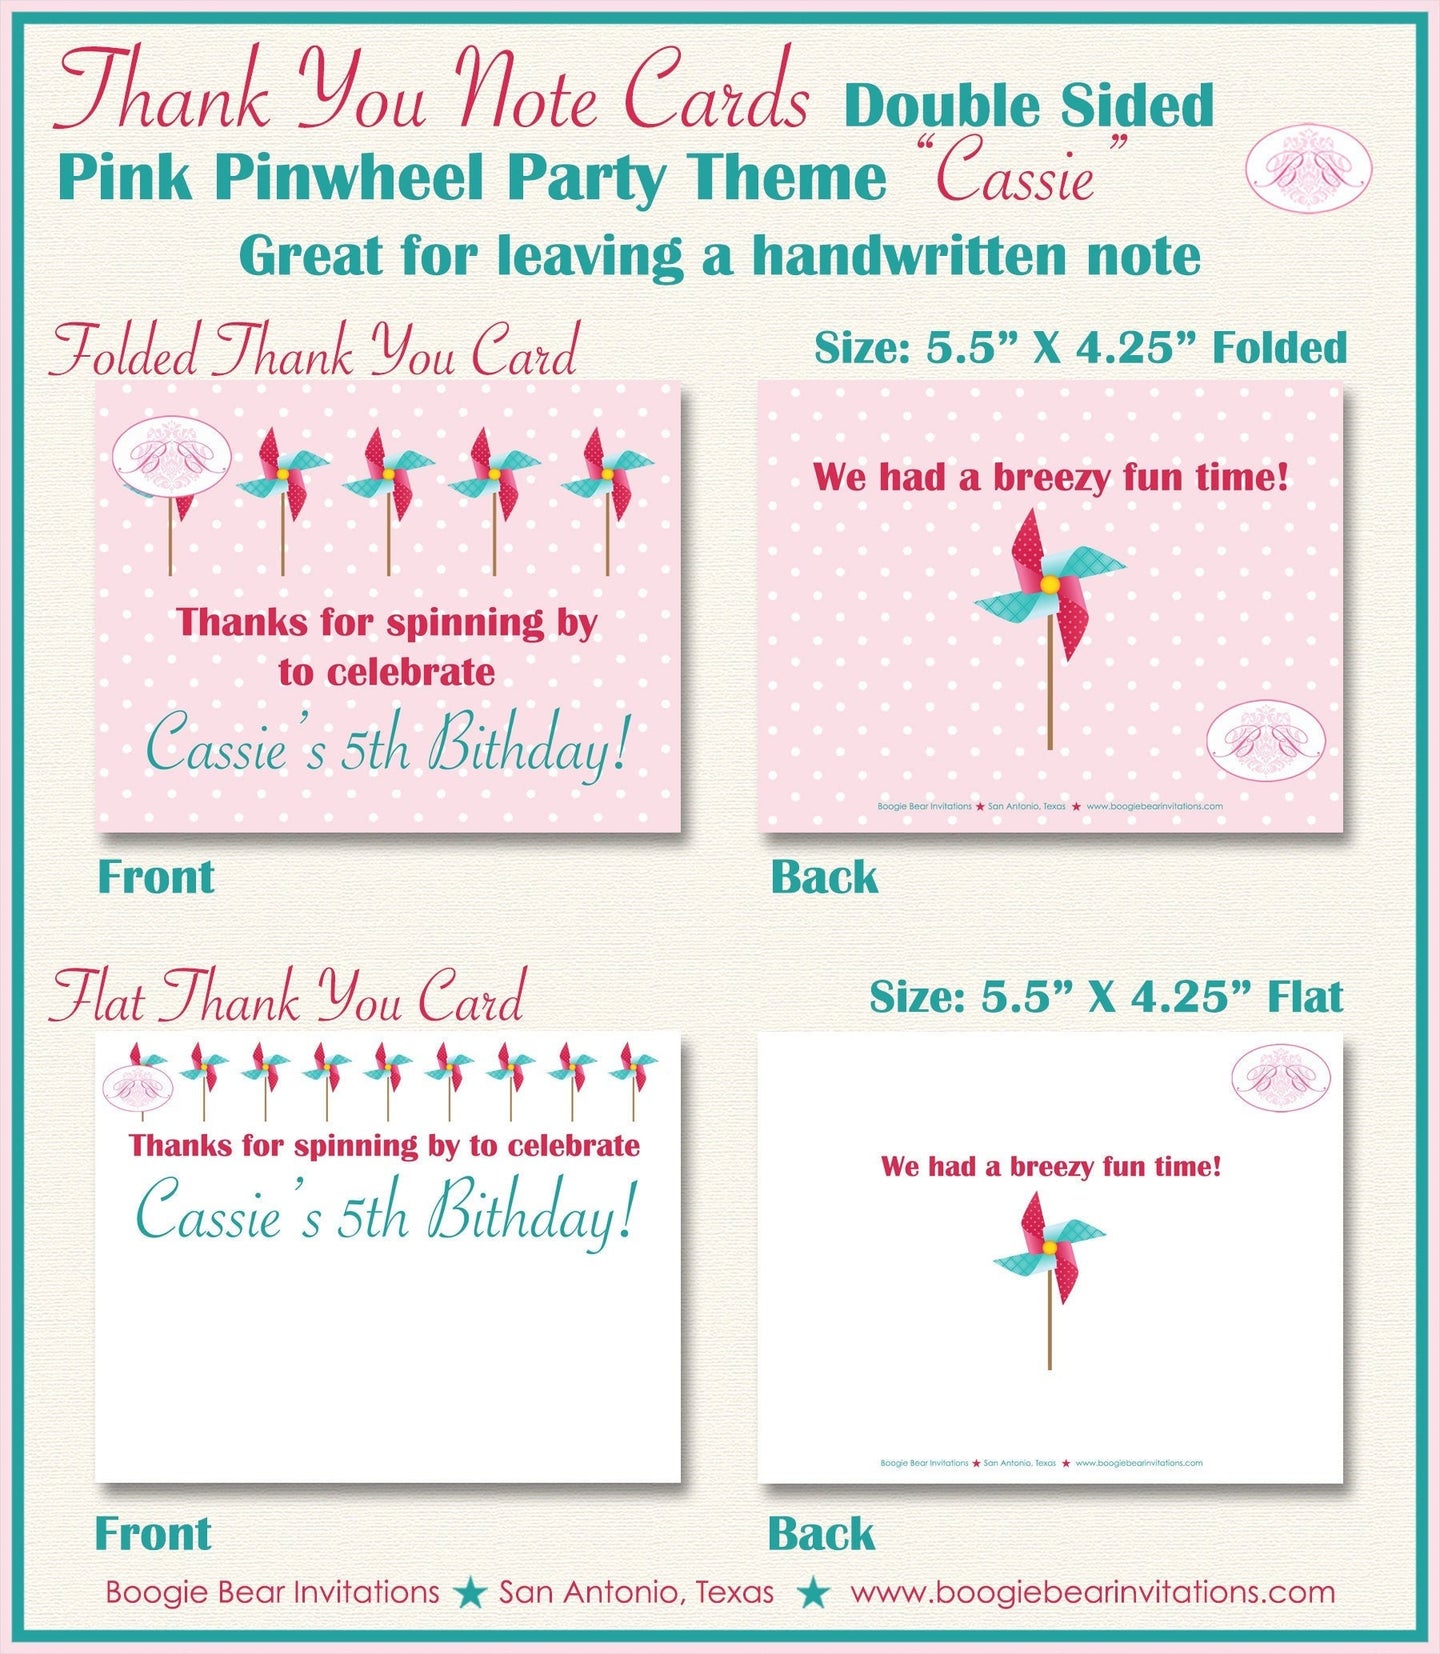 Pinwheel Birthday Party Thank You Card Retro Pink Aqua Teal Girl Summer Spring Picnic Polka Dot Boogie Bear Invitations Cassie Theme Printed